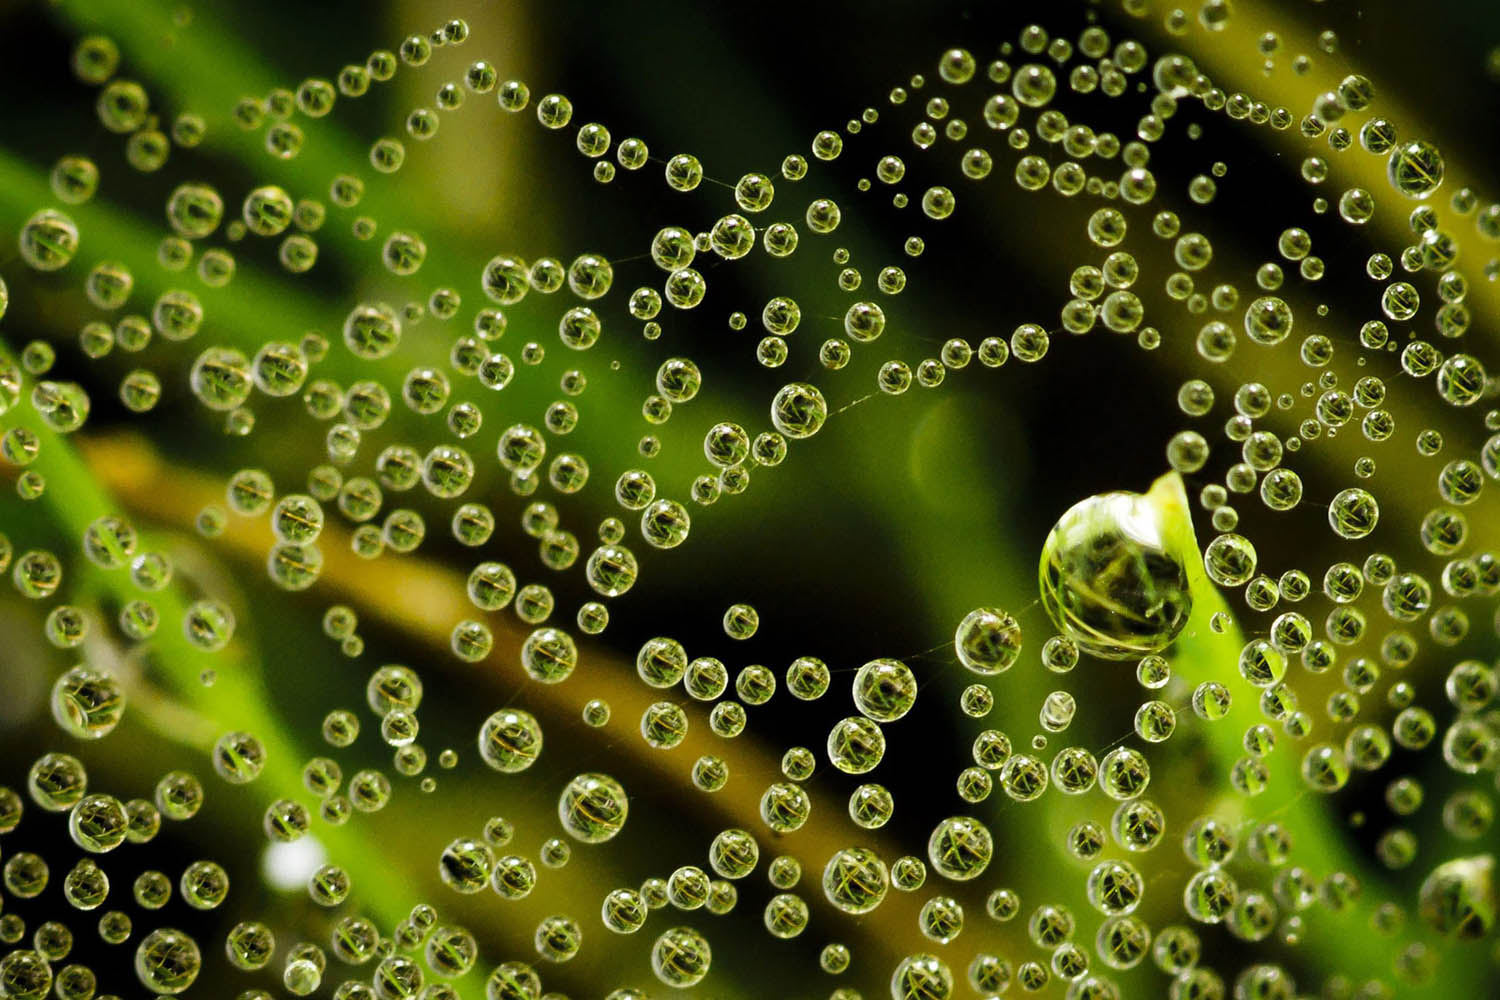 Dew drops in Spider web